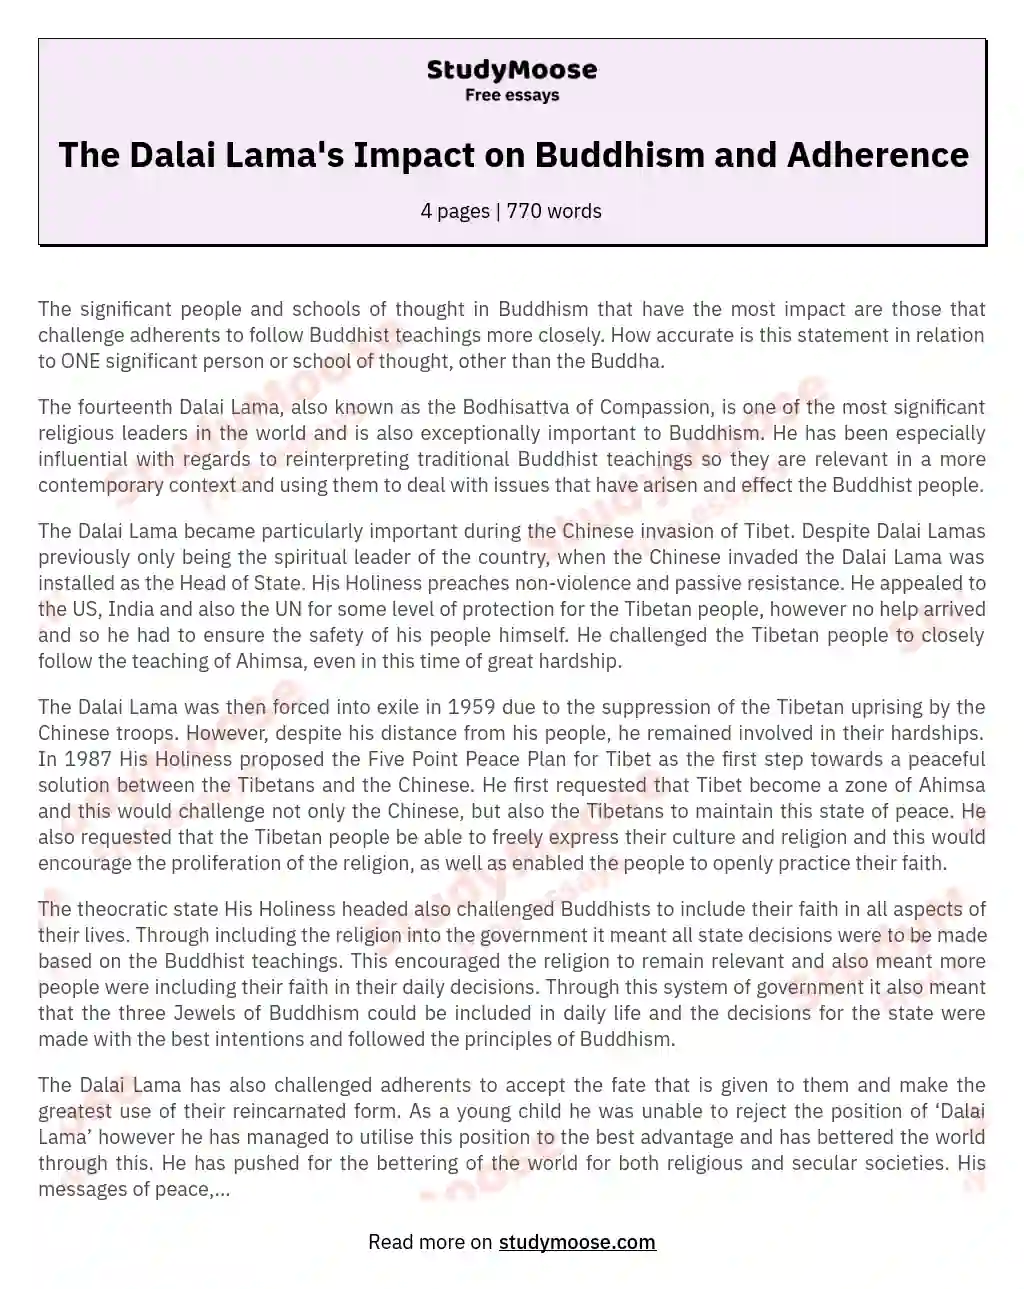 The Dalai Lama's Impact on Buddhism and Adherence essay